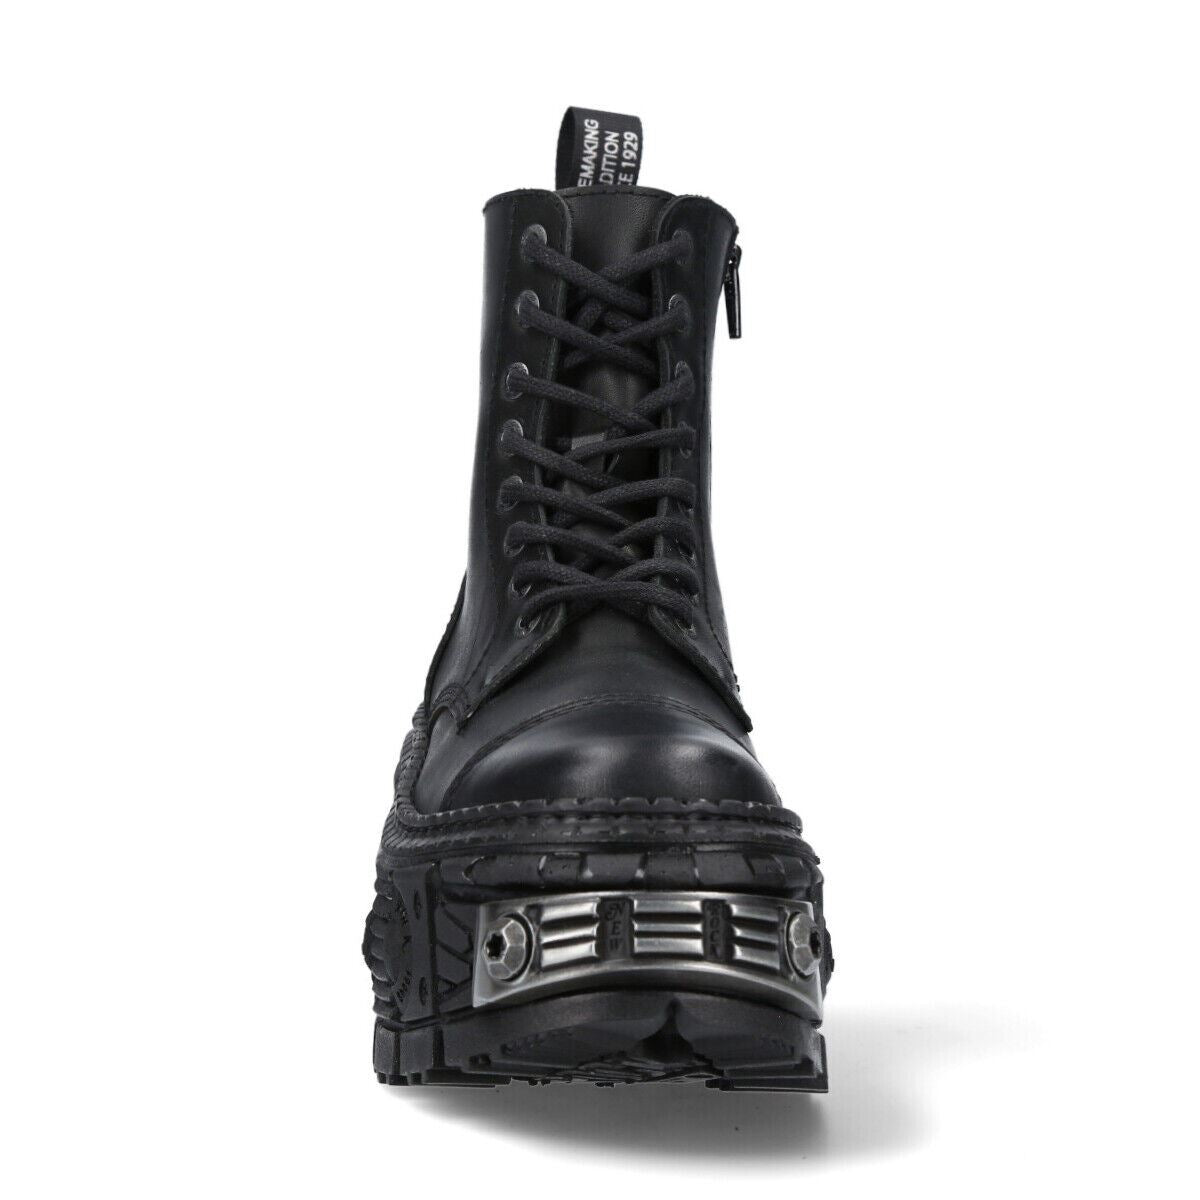 New Rock Metallic Black Leather Boots-WALL083C-S4 - Upperclass Fashions 